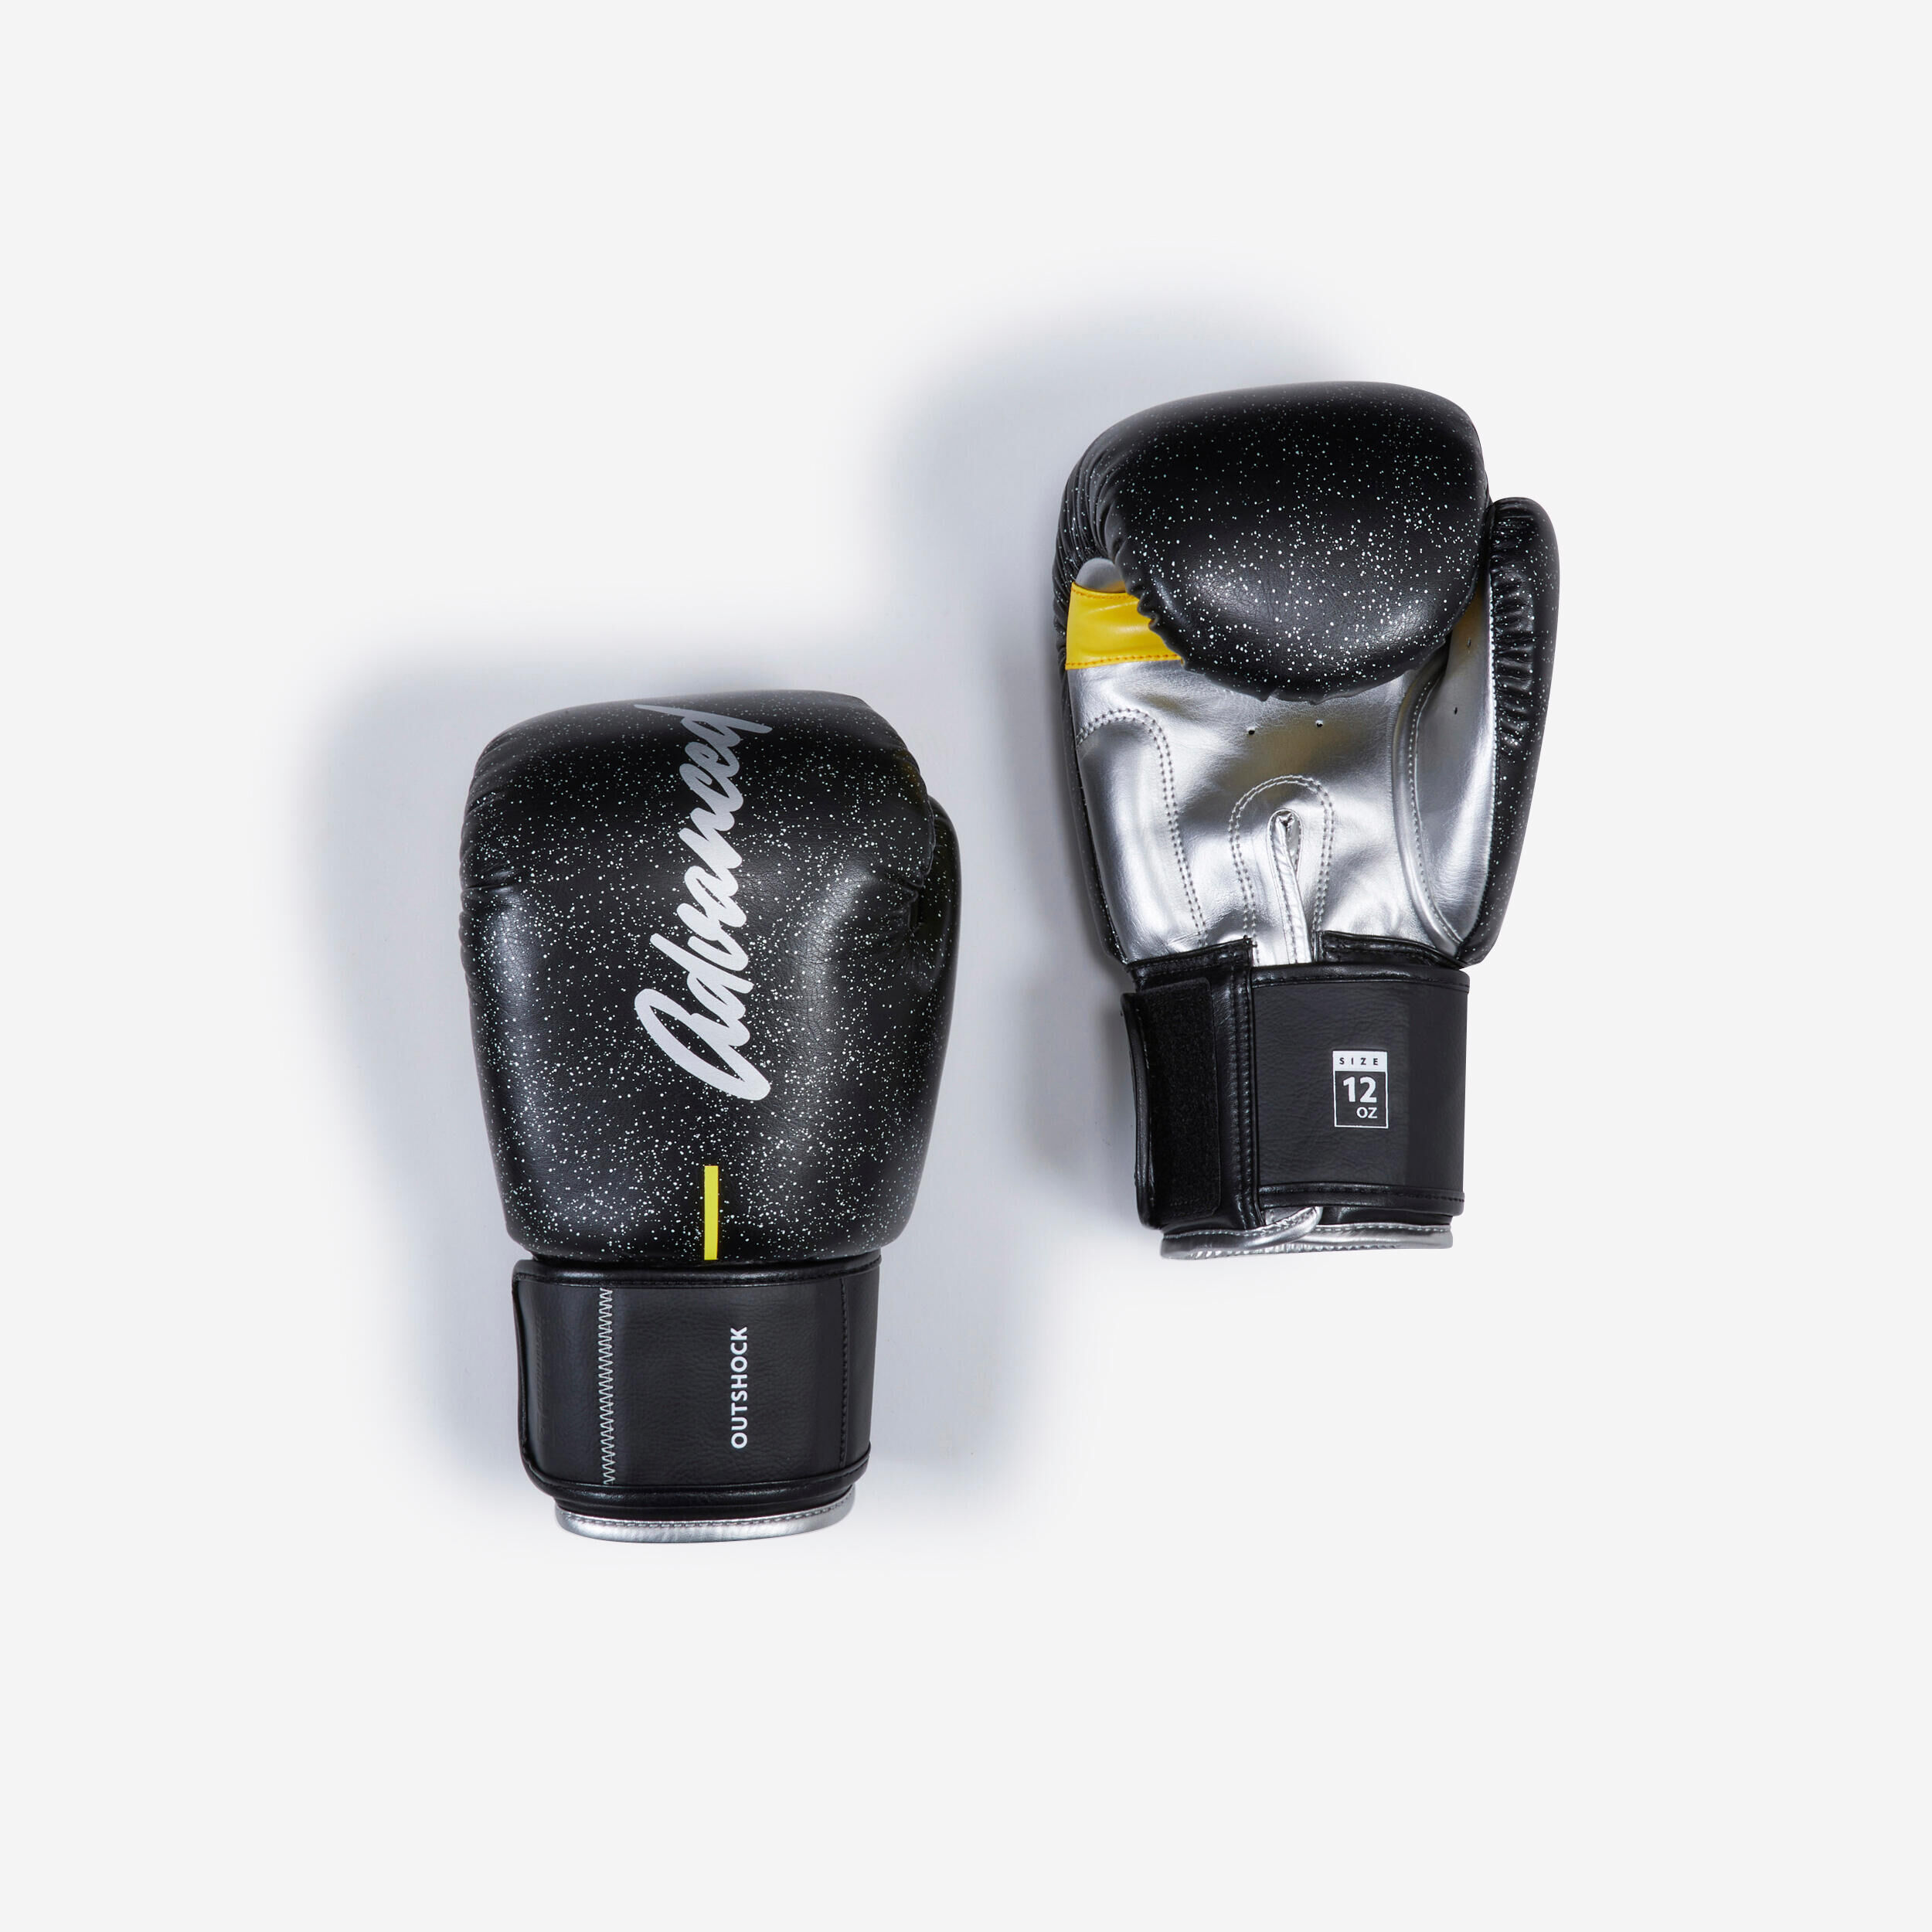 OUTSHOCK Kickboxing/Muay Thai Gloves 500 - Black